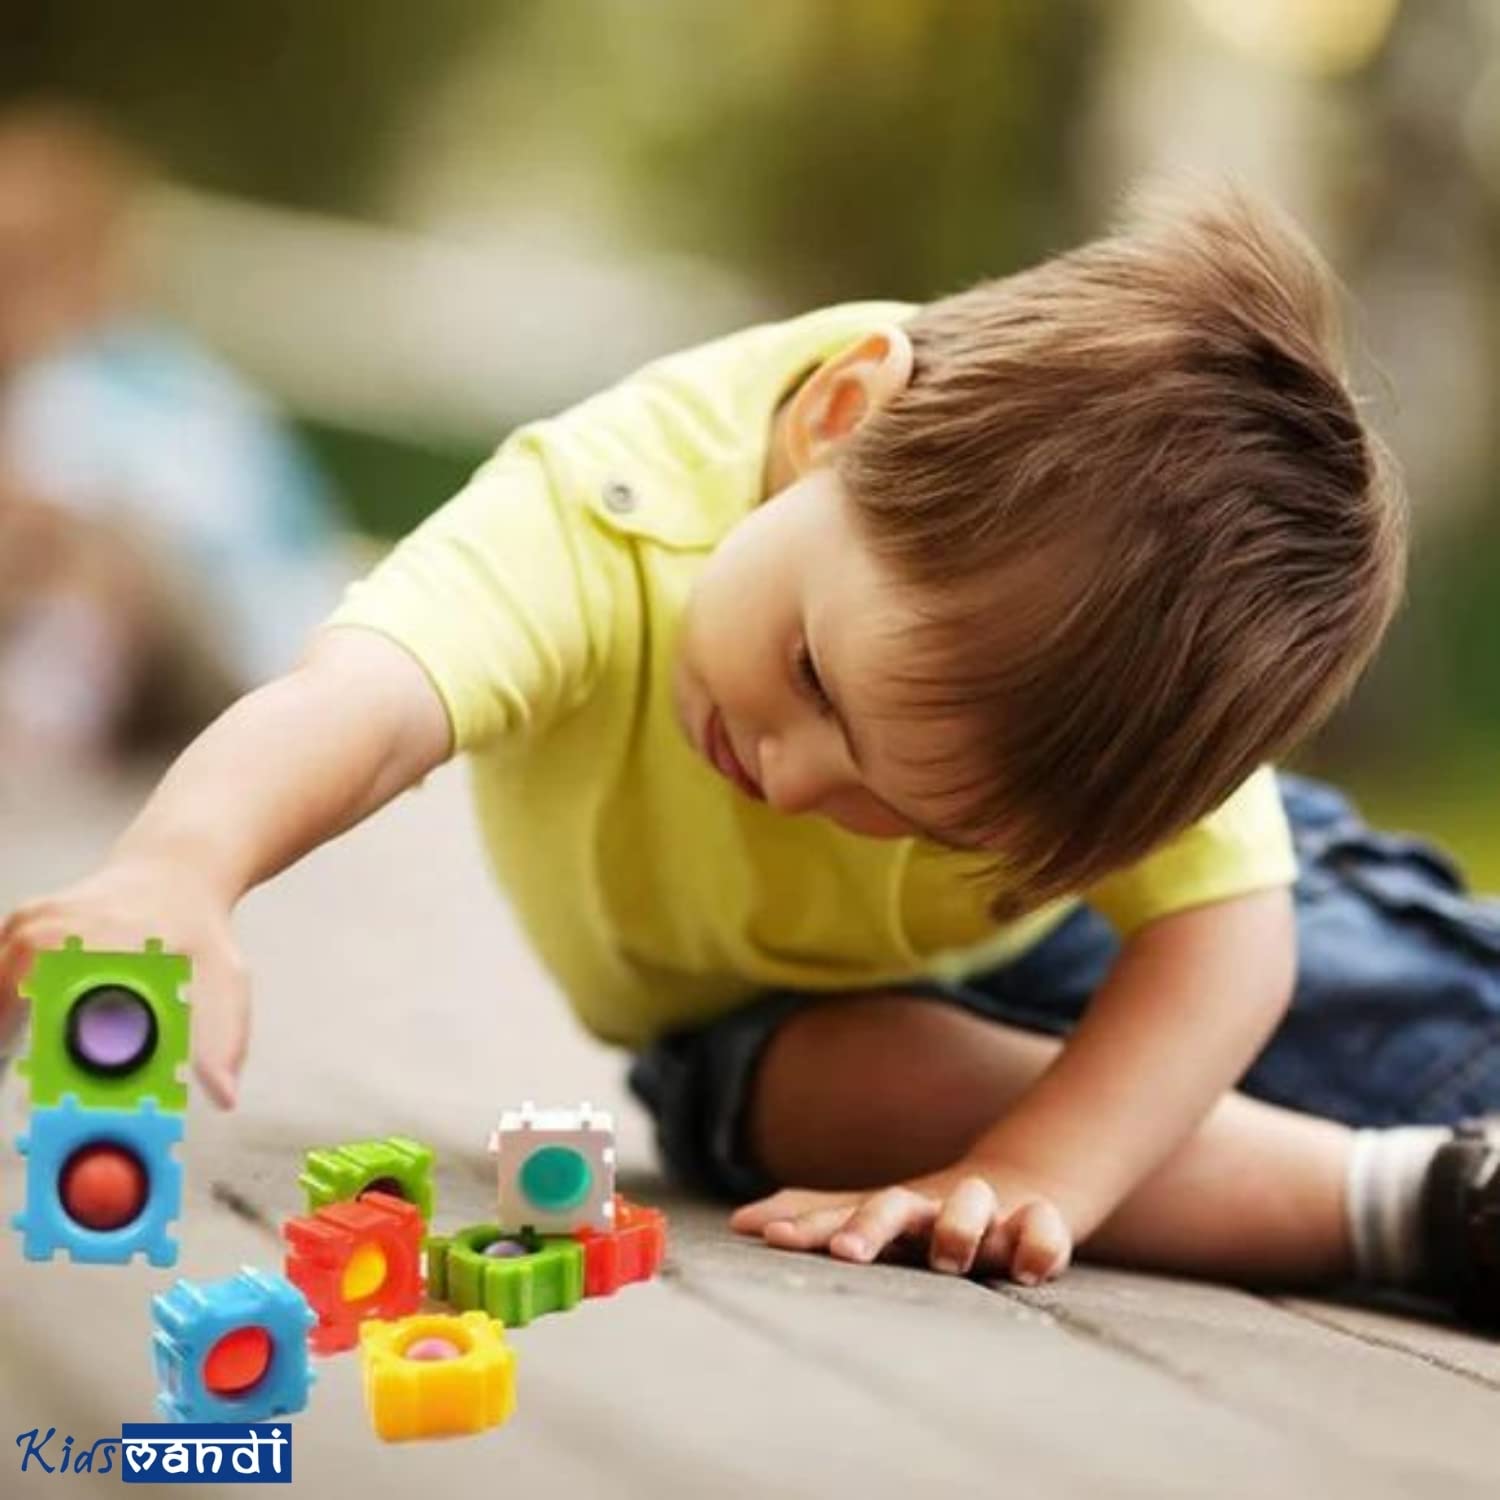 Kids Mandi Push Pop Puzzle- Booster Brain Development Tool Pack of 30